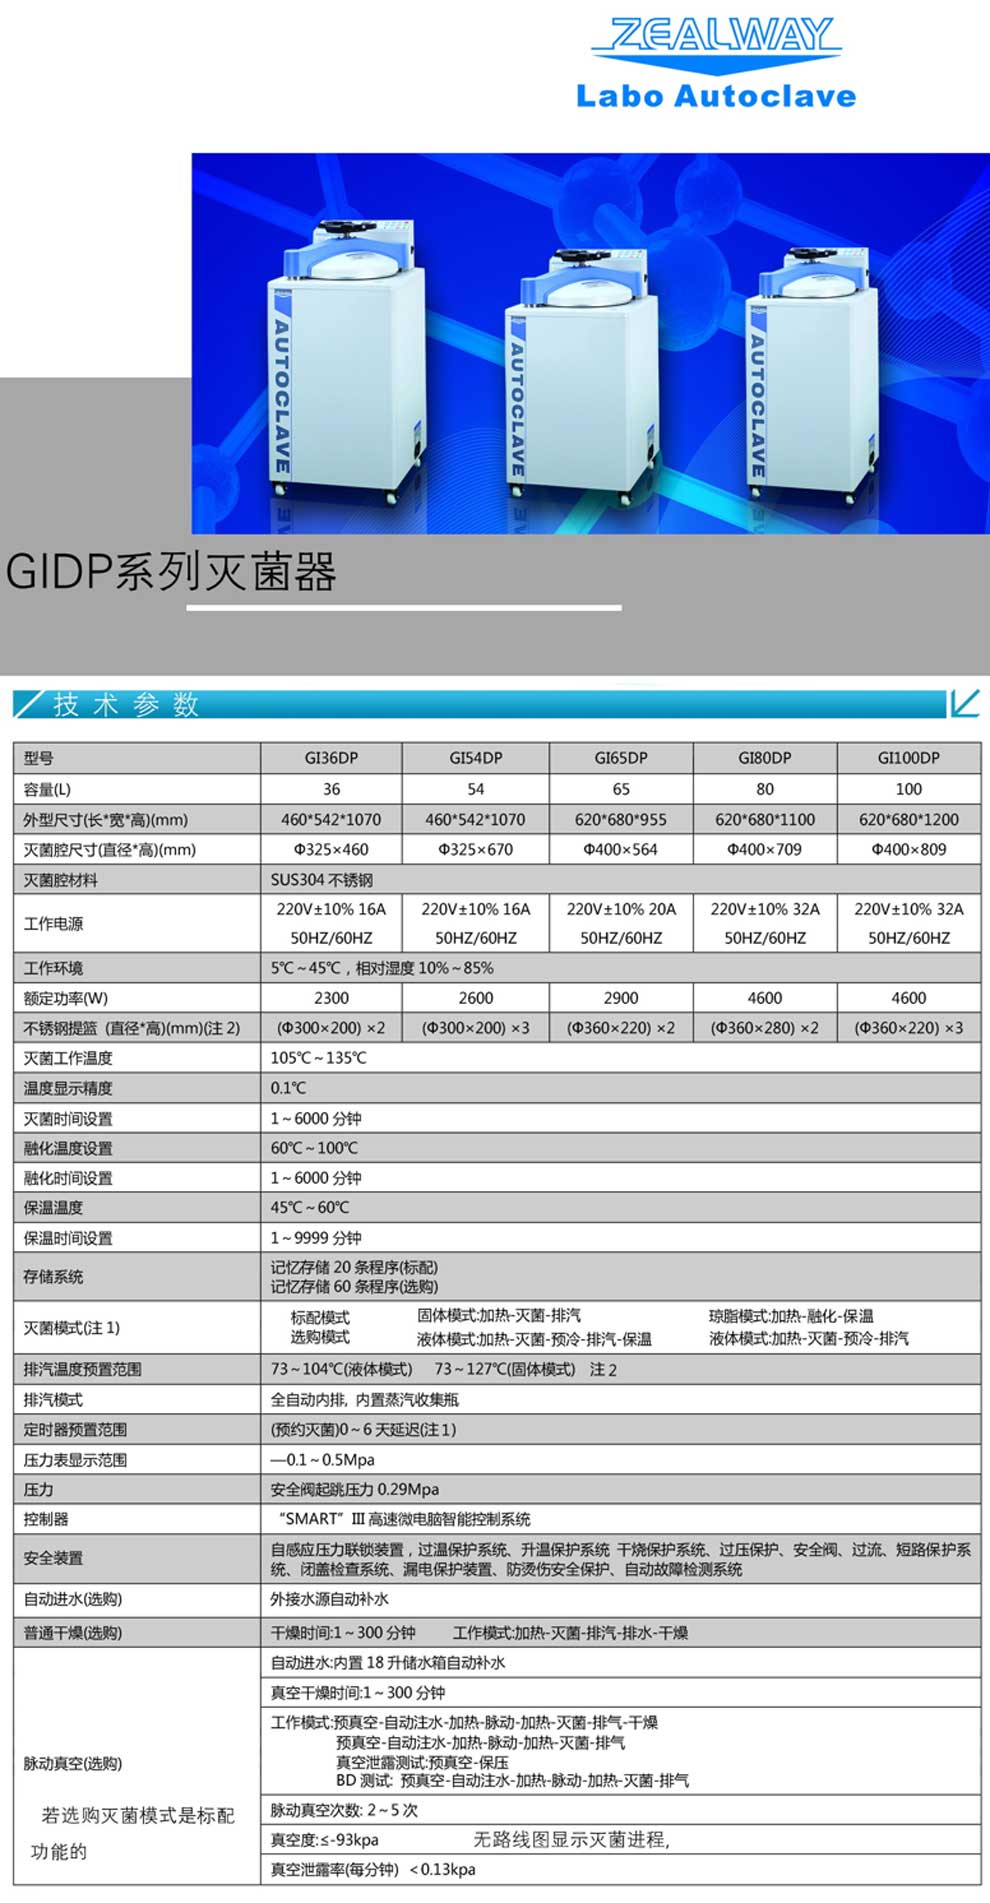 GIDP--彩页.jpg